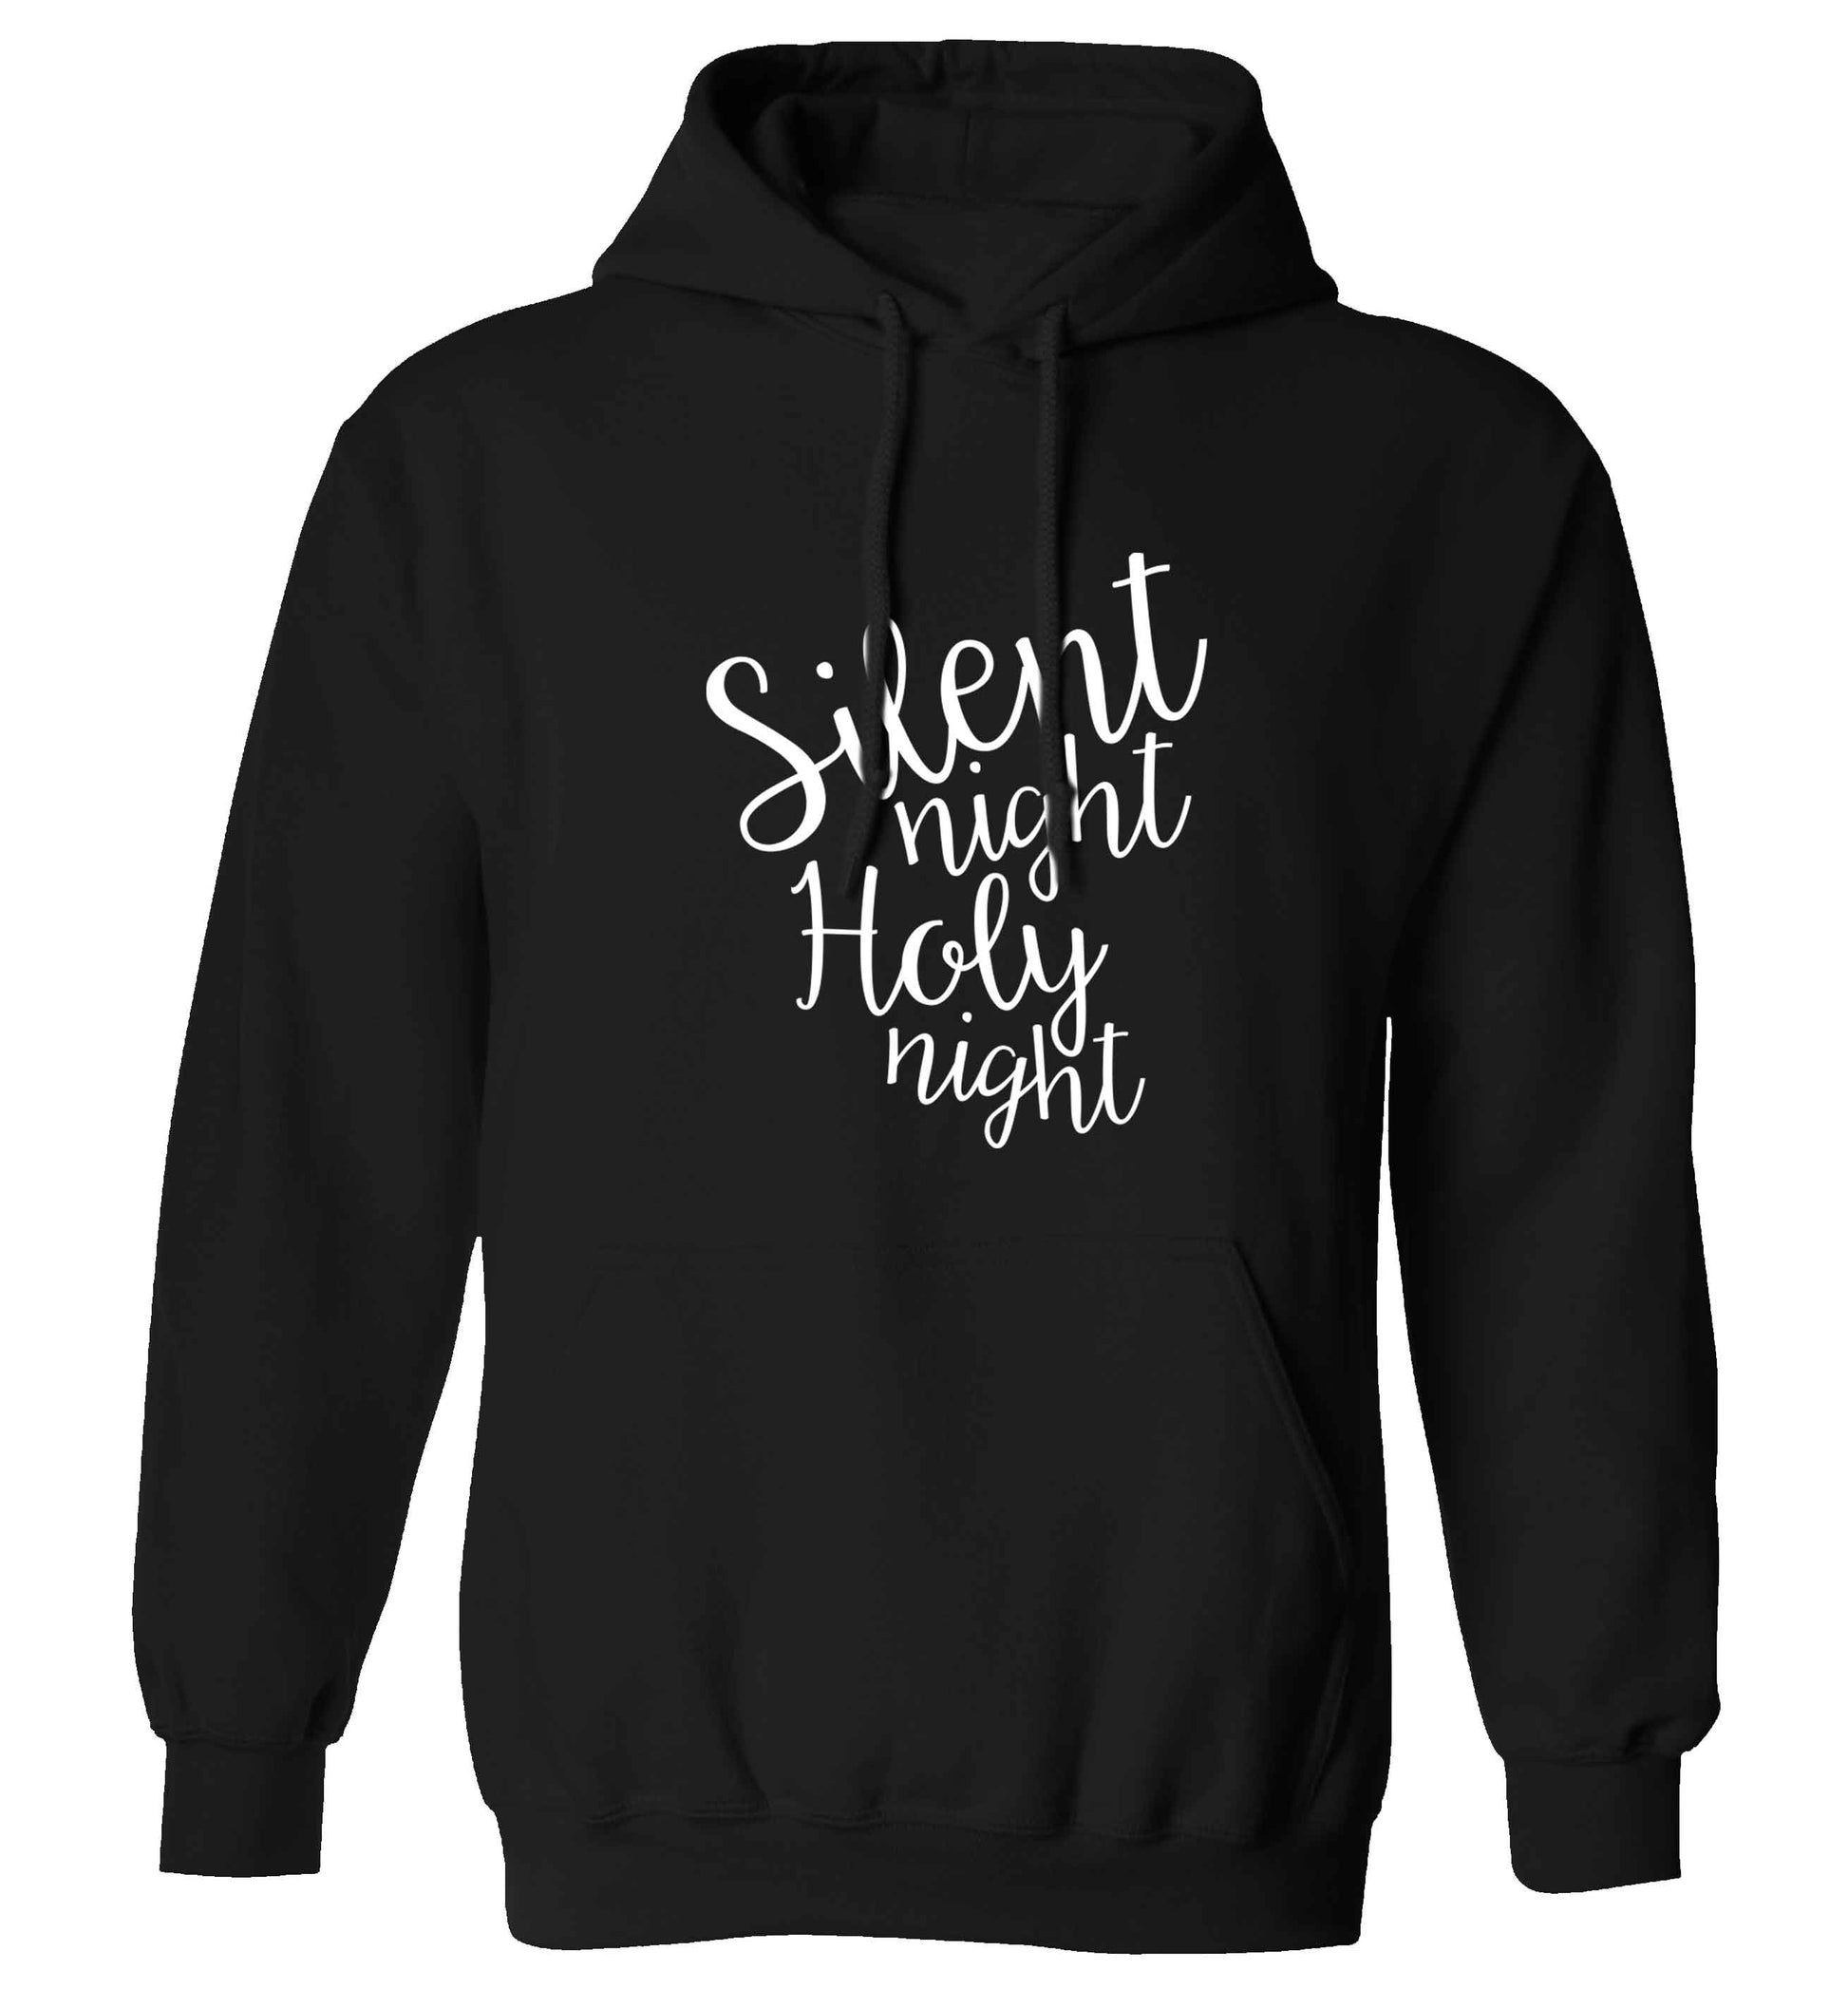 Silent night holy night adults unisex black hoodie 2XL